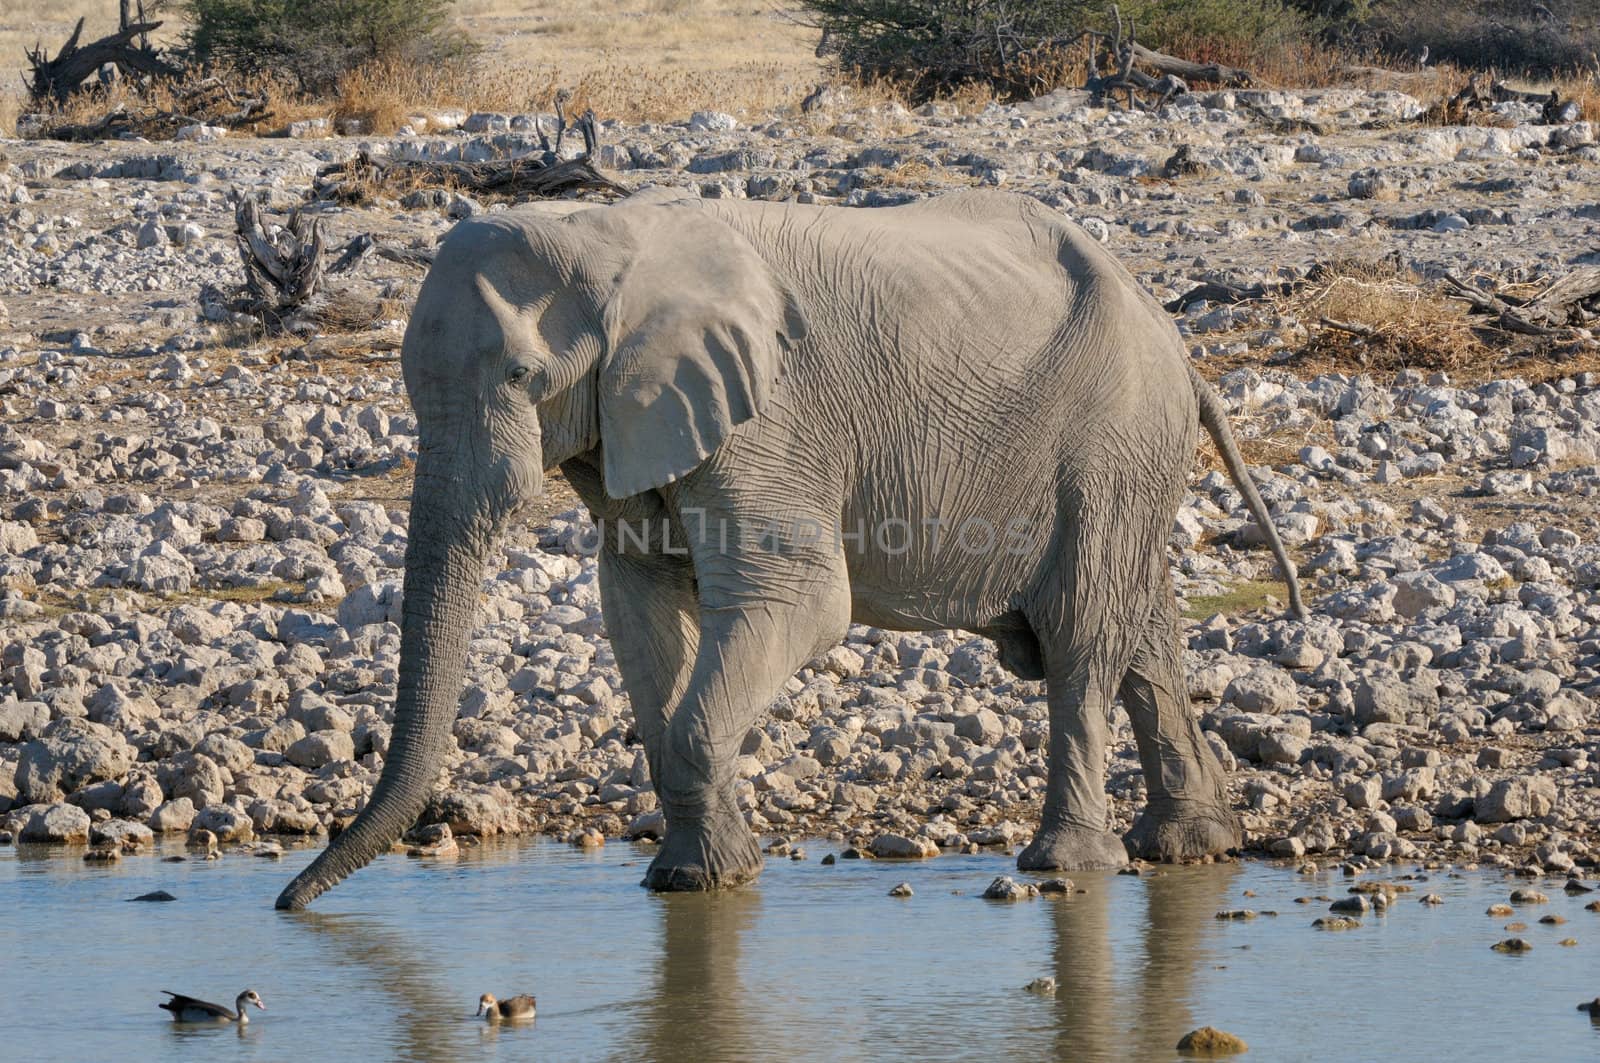 Elephant drinking water at Okaukeujo in the Etosha National Park, Namibia